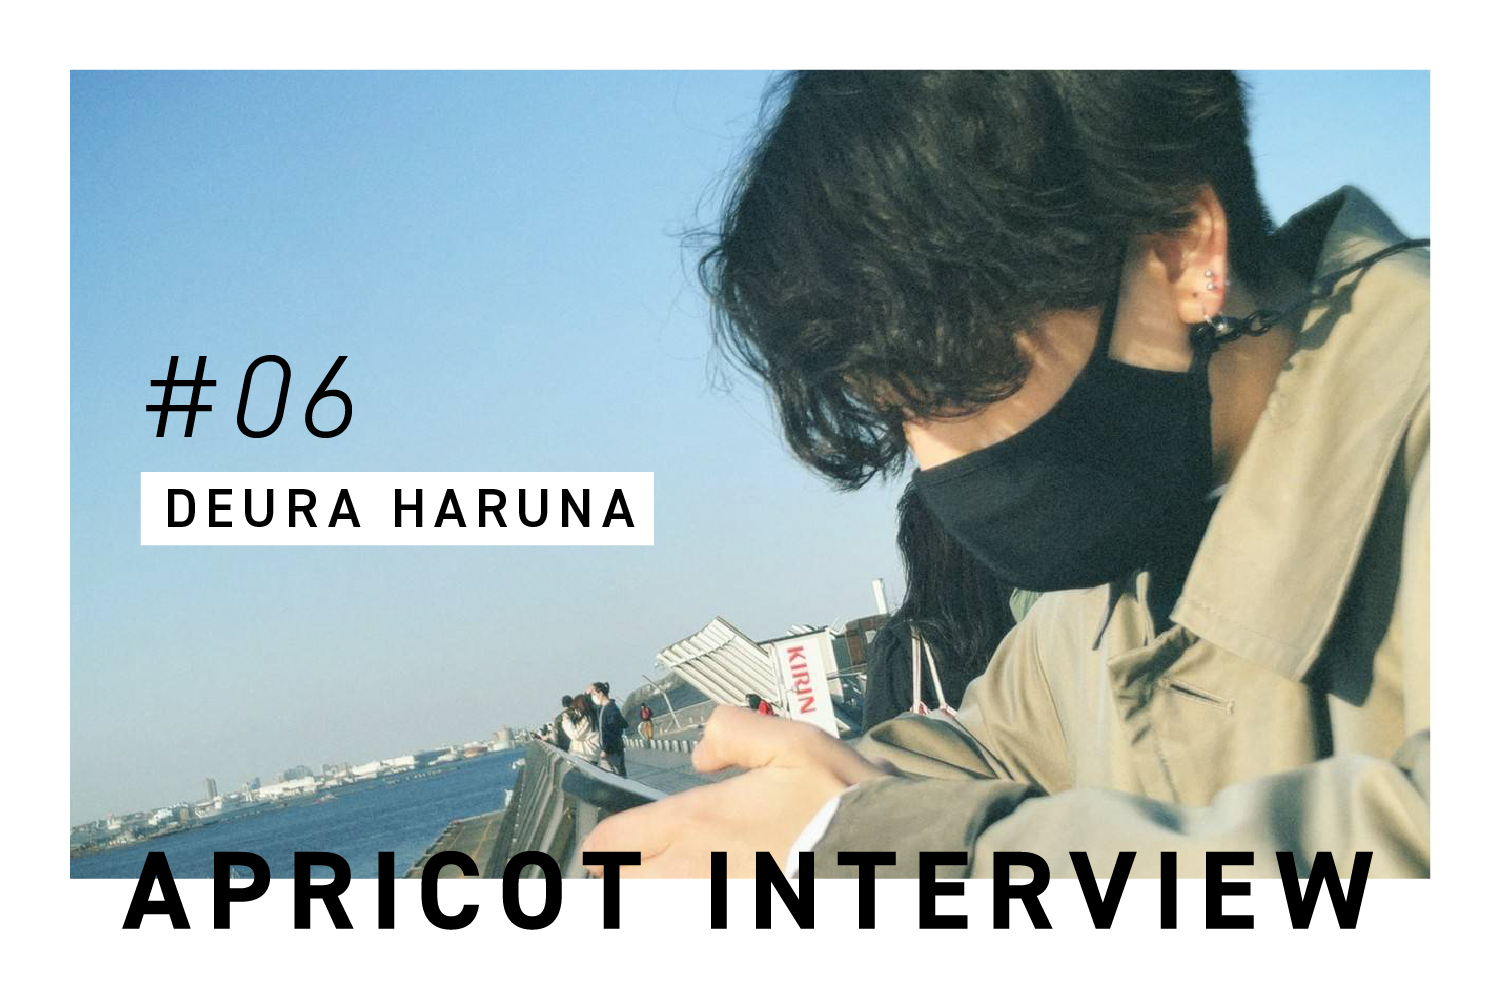 #06 APRICOT INTERVIEW by Deura Haruna